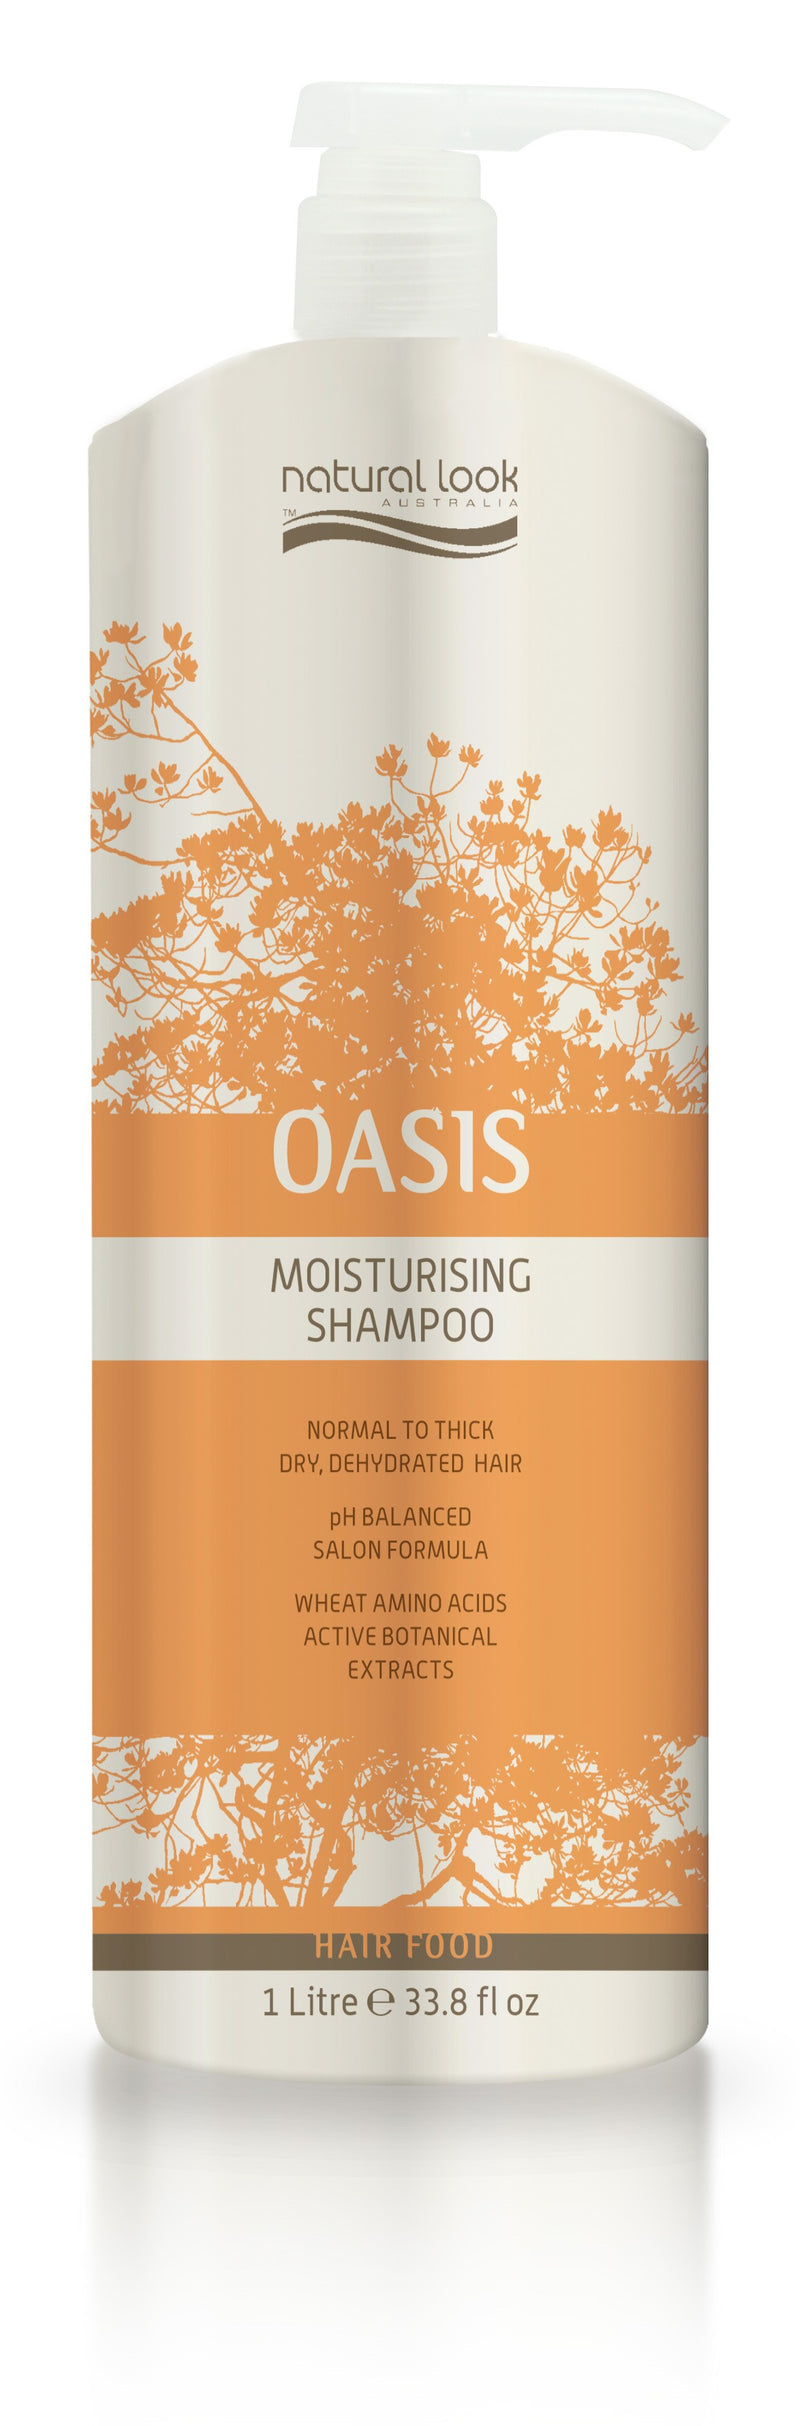 Natural Look Oasis Moisturising Shampoo 1L